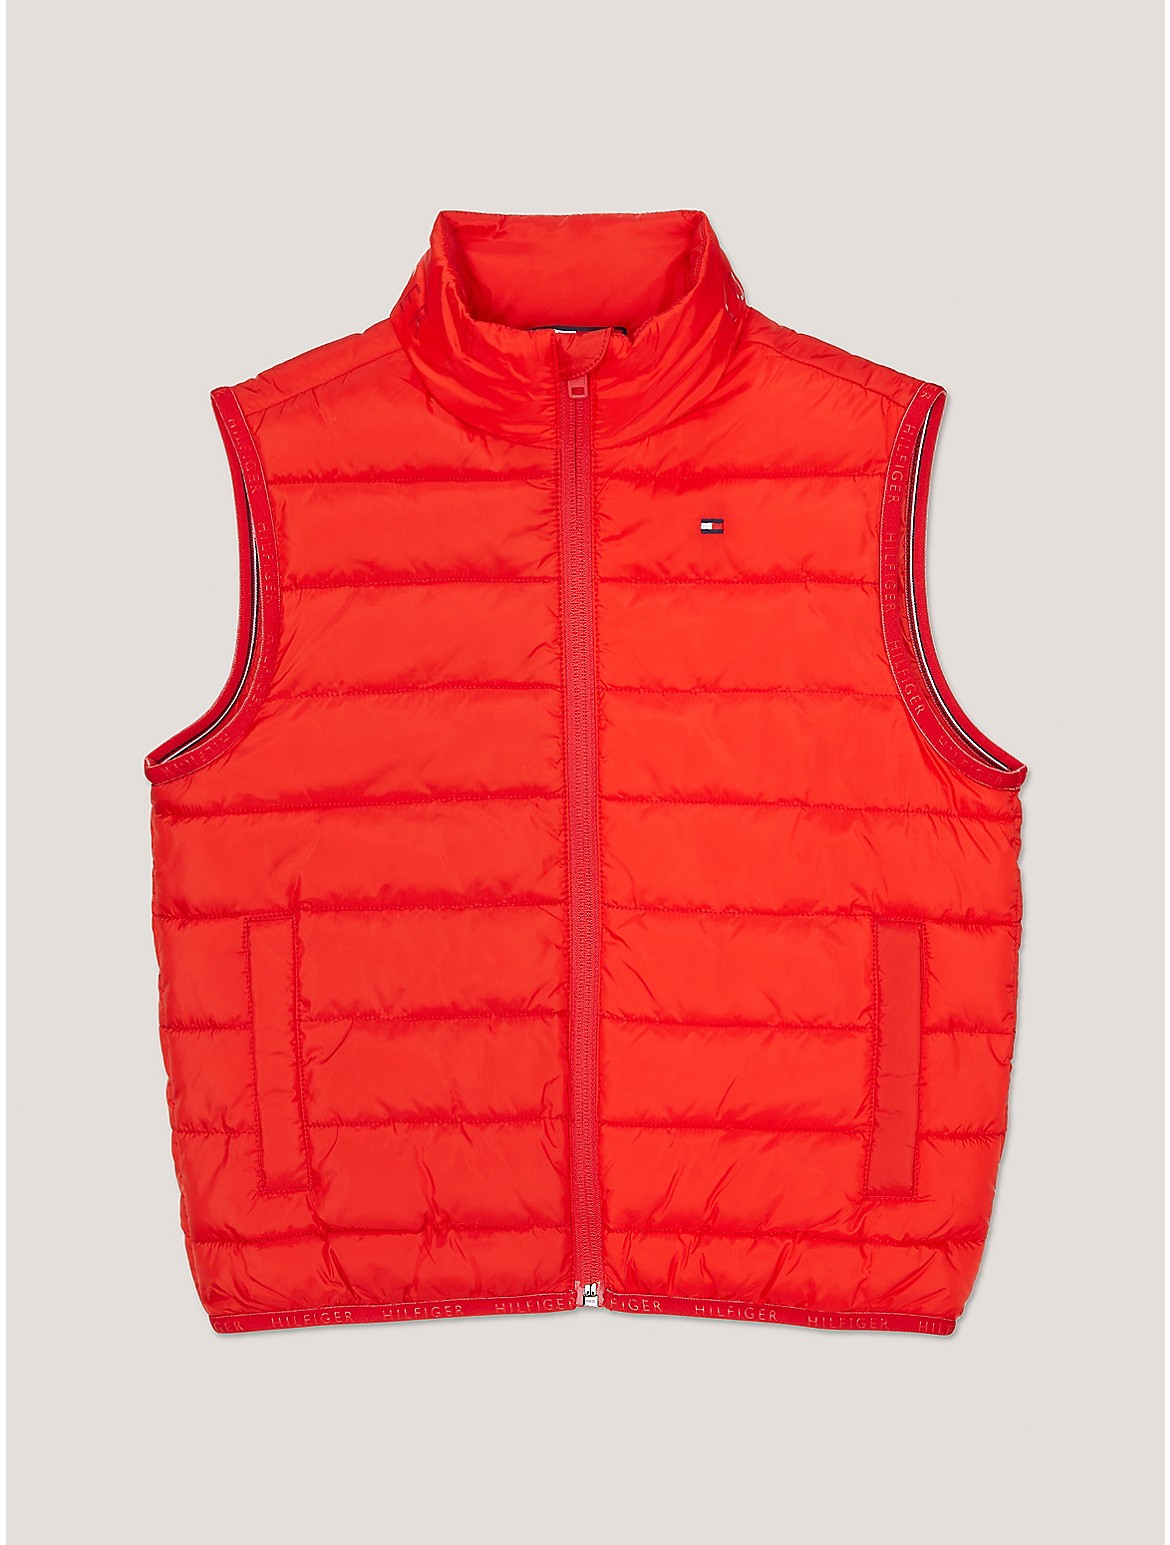 Tommy Hilfiger Boys' Kids' Insulated Vest - Red - L